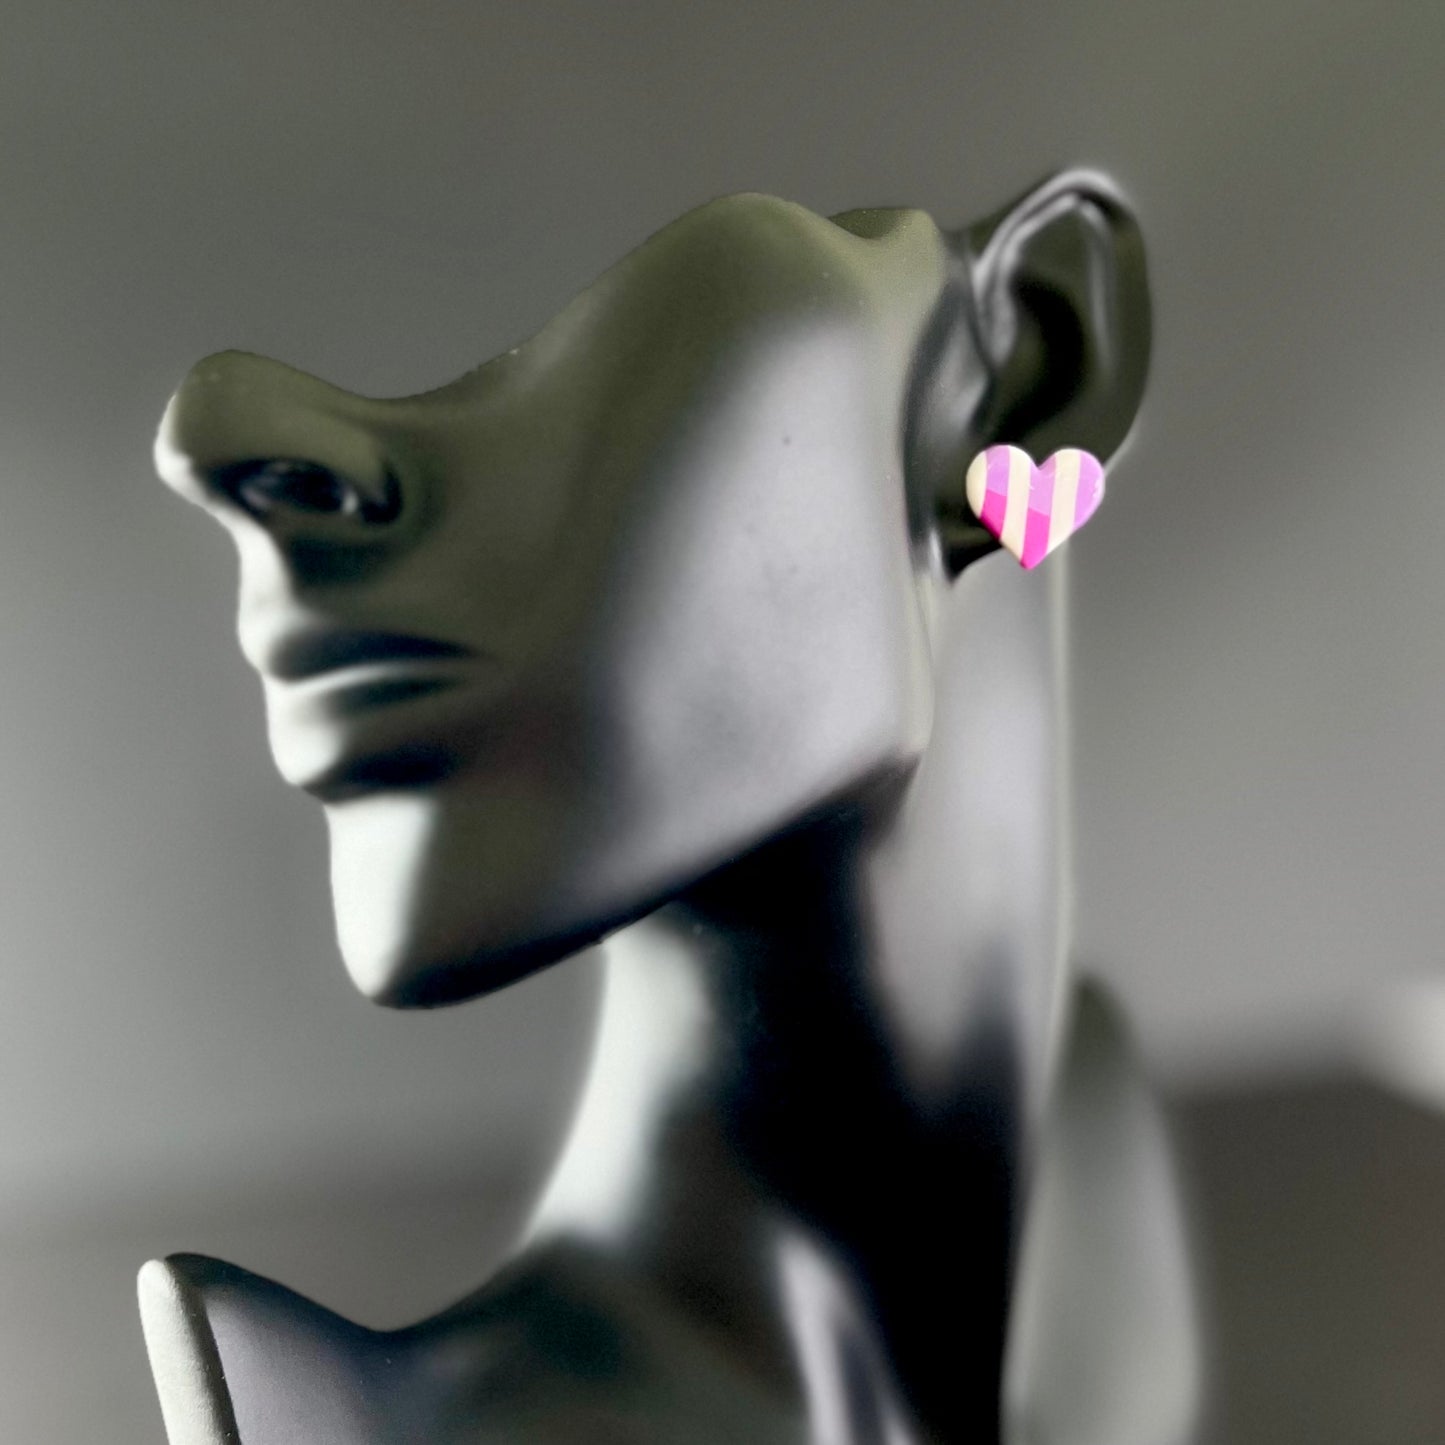 Small heart studs, pink purple white stripes, handmade earrings